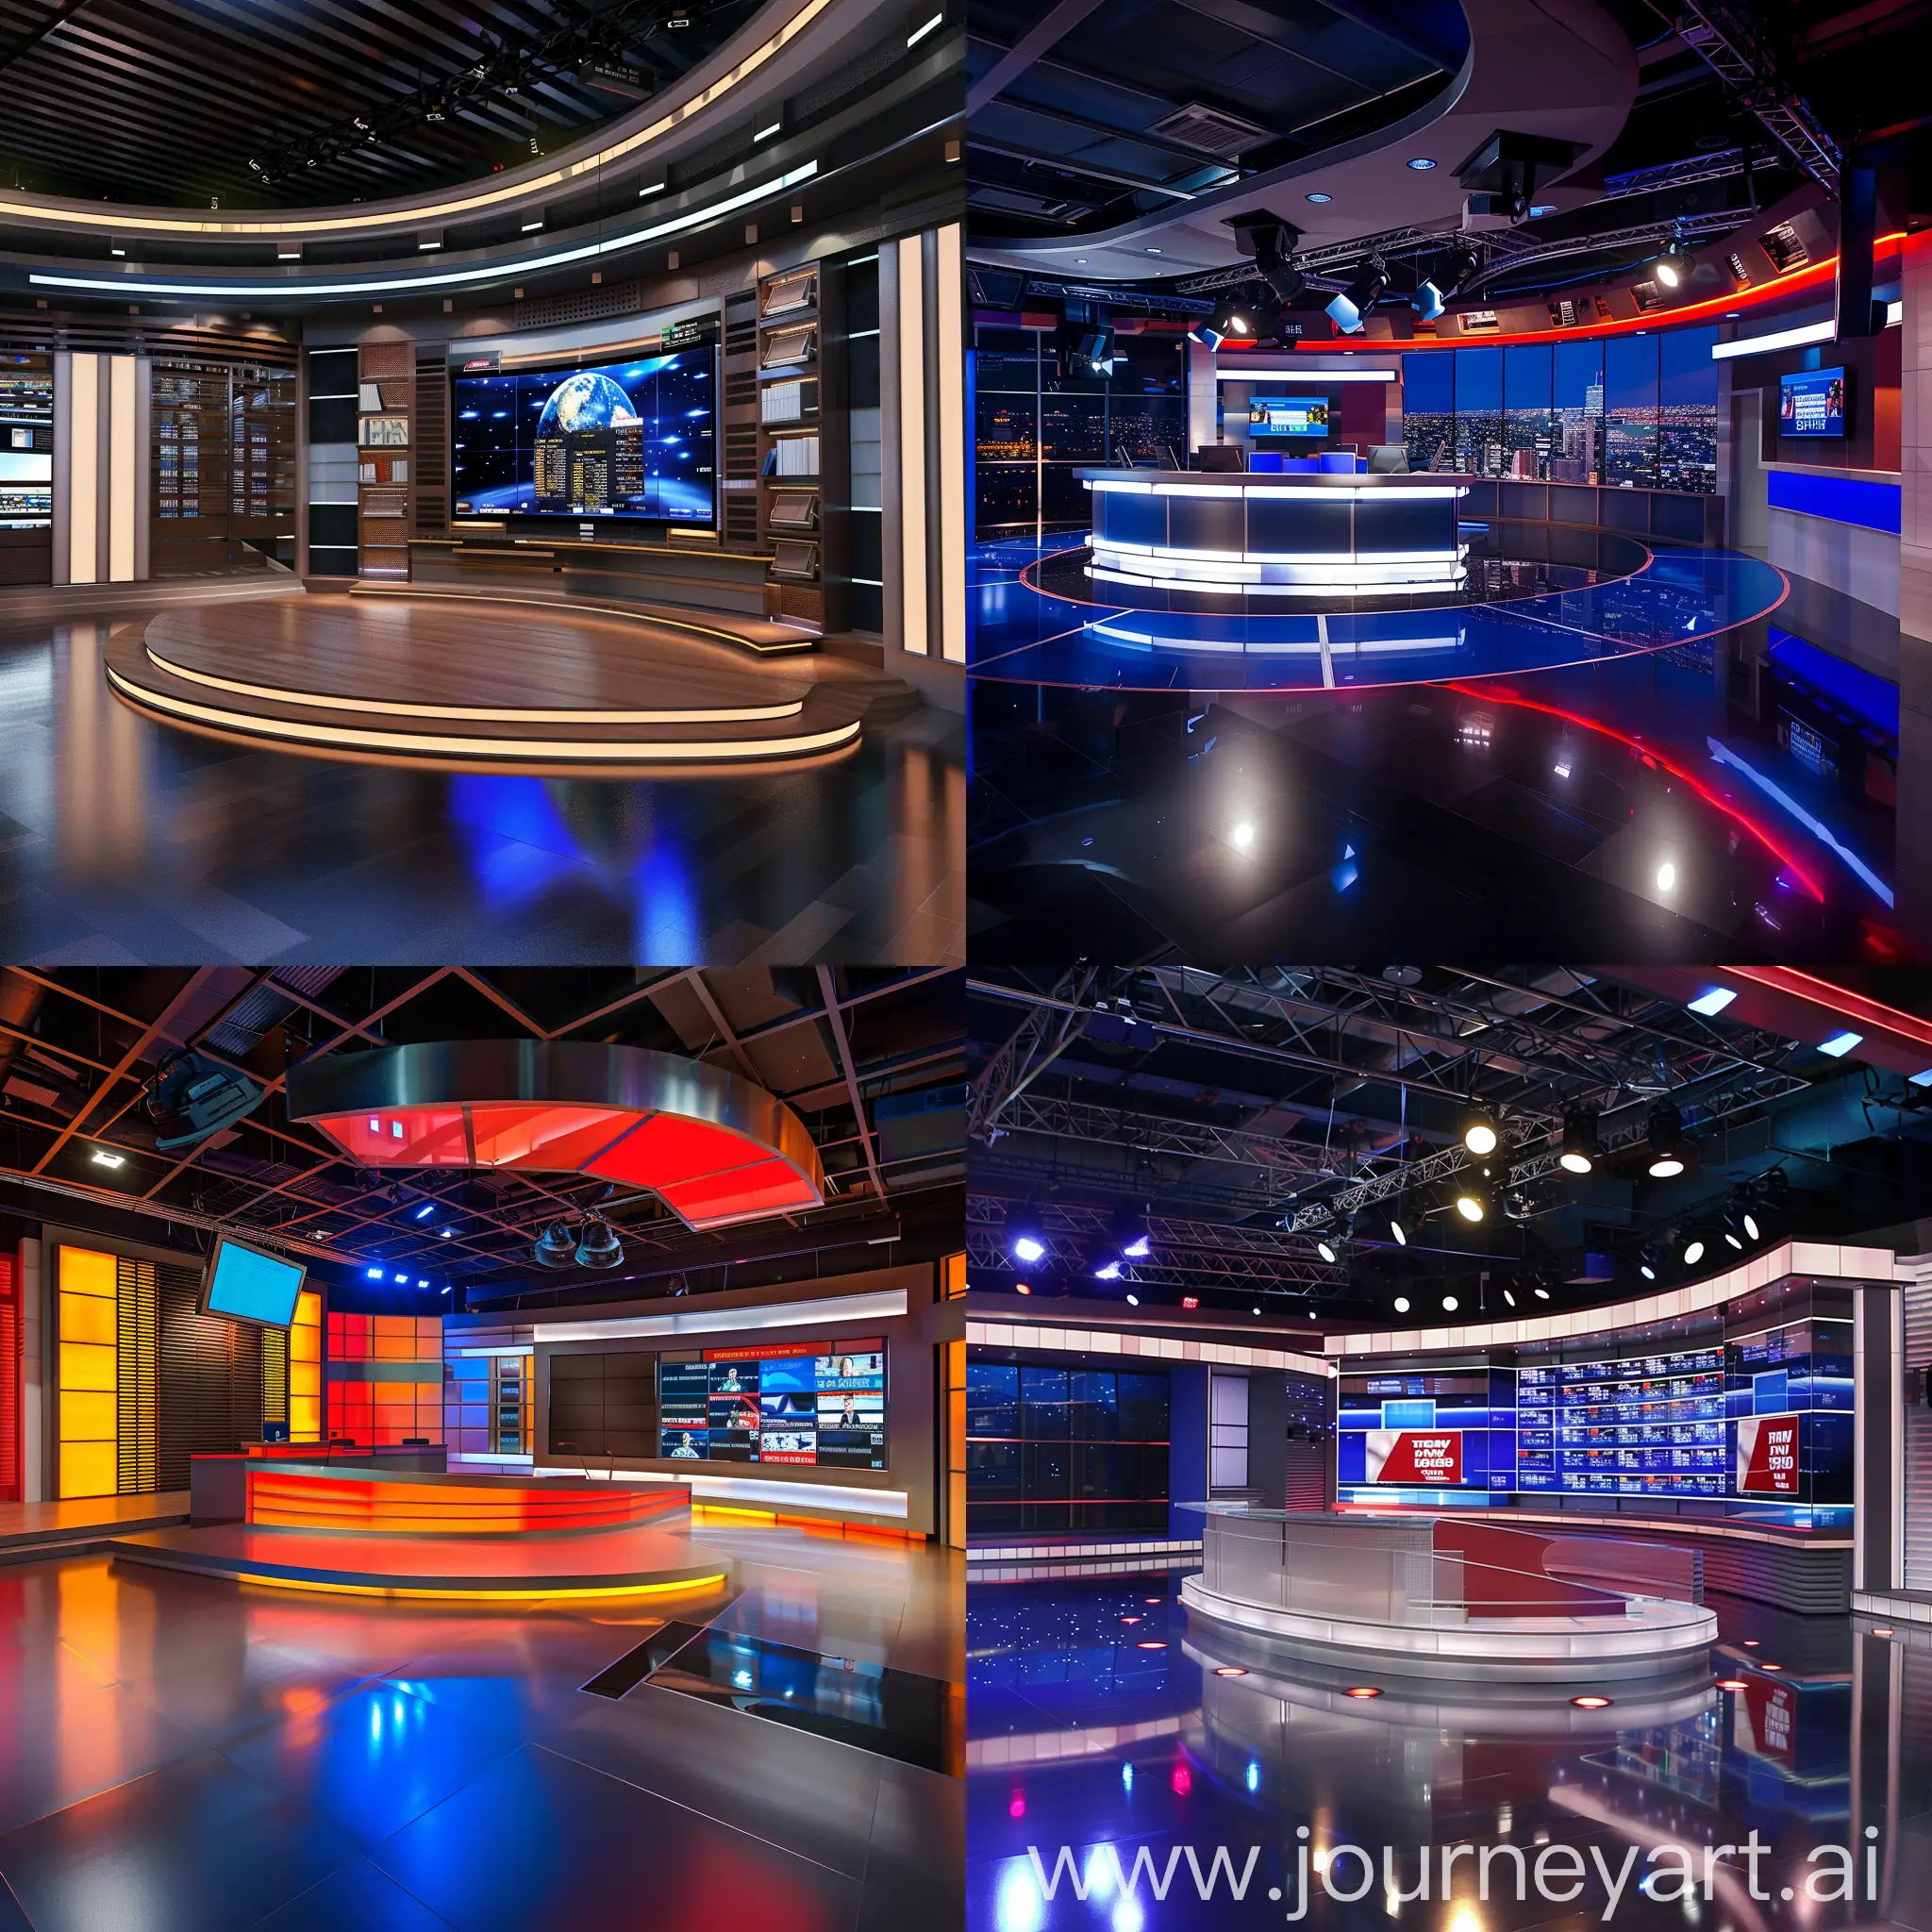 Dynamic-Modern-TV-News-Studio-Set-with-HighTech-Features